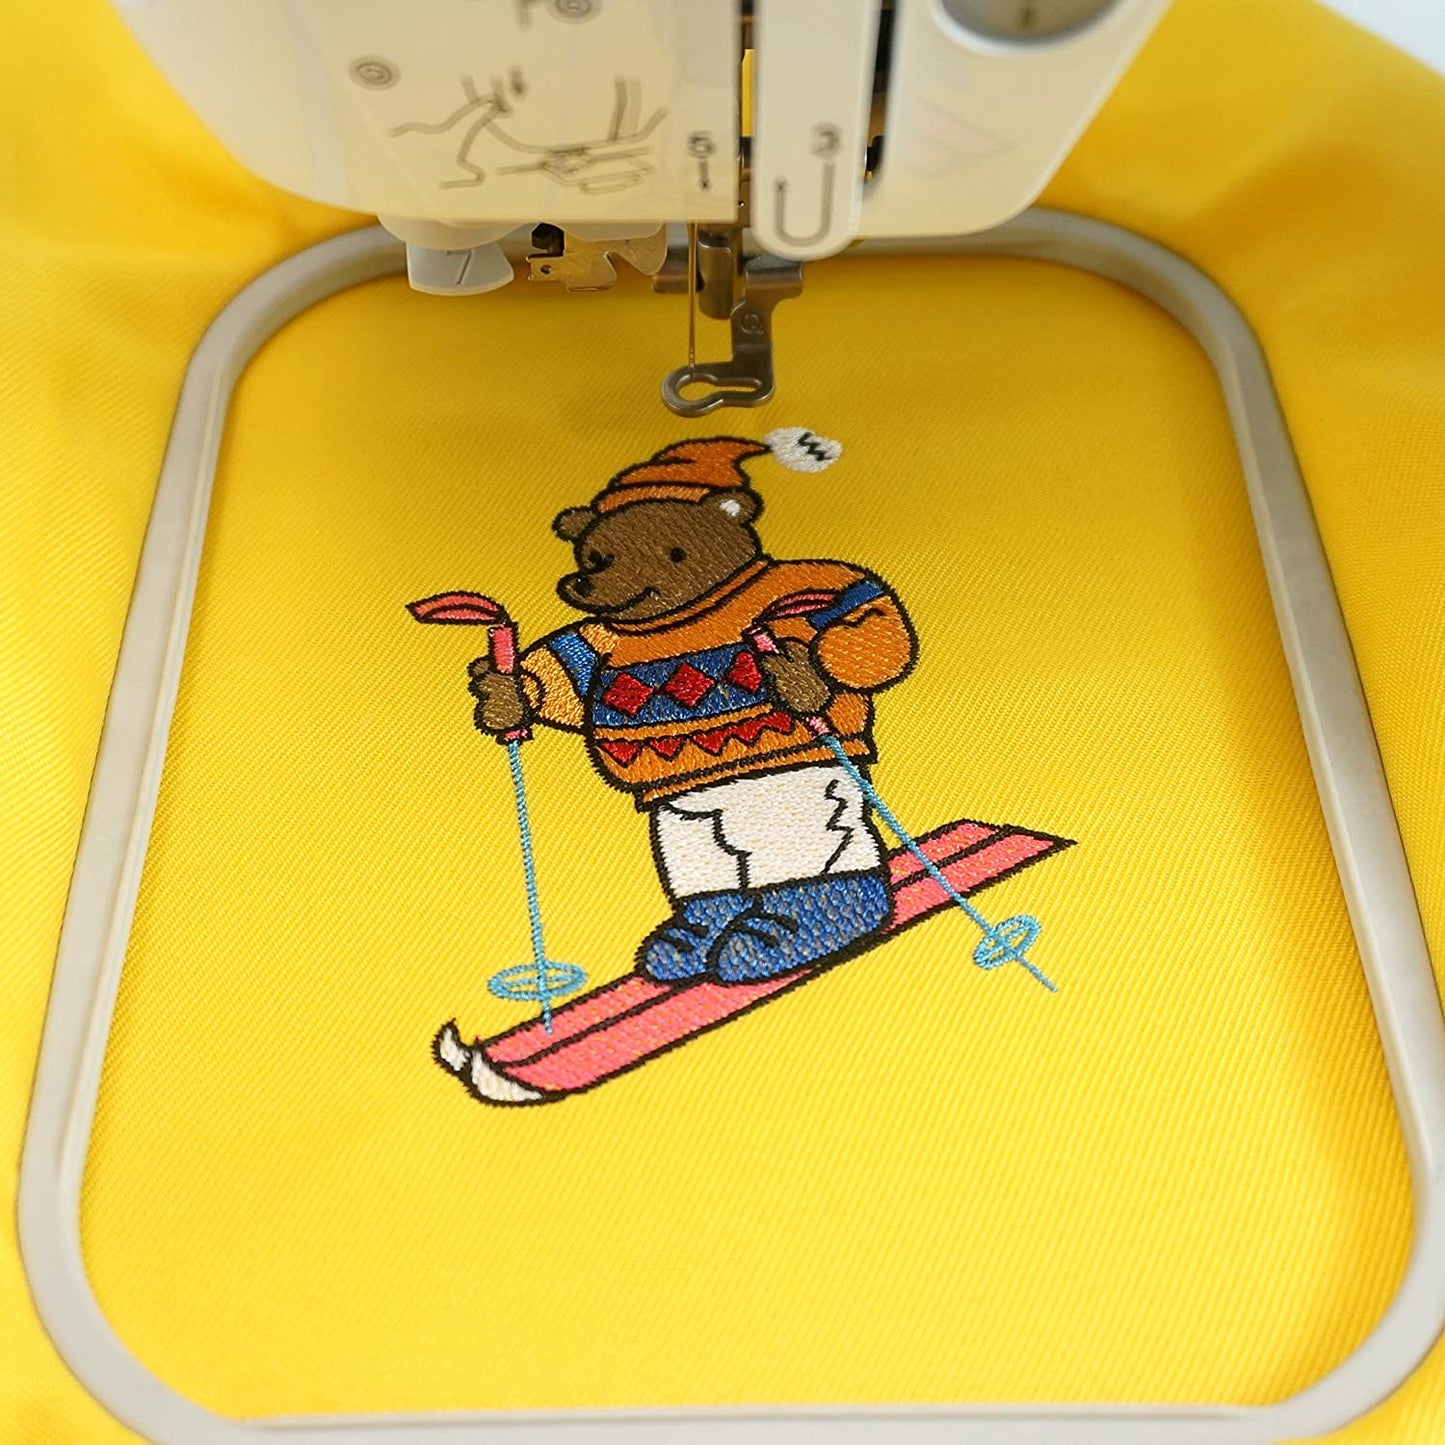 New brothread Cut Away Machine Embroidery Stabilizer Backing 8"x8" - 200 Precut Sheets - Medium Weight 2.5oz